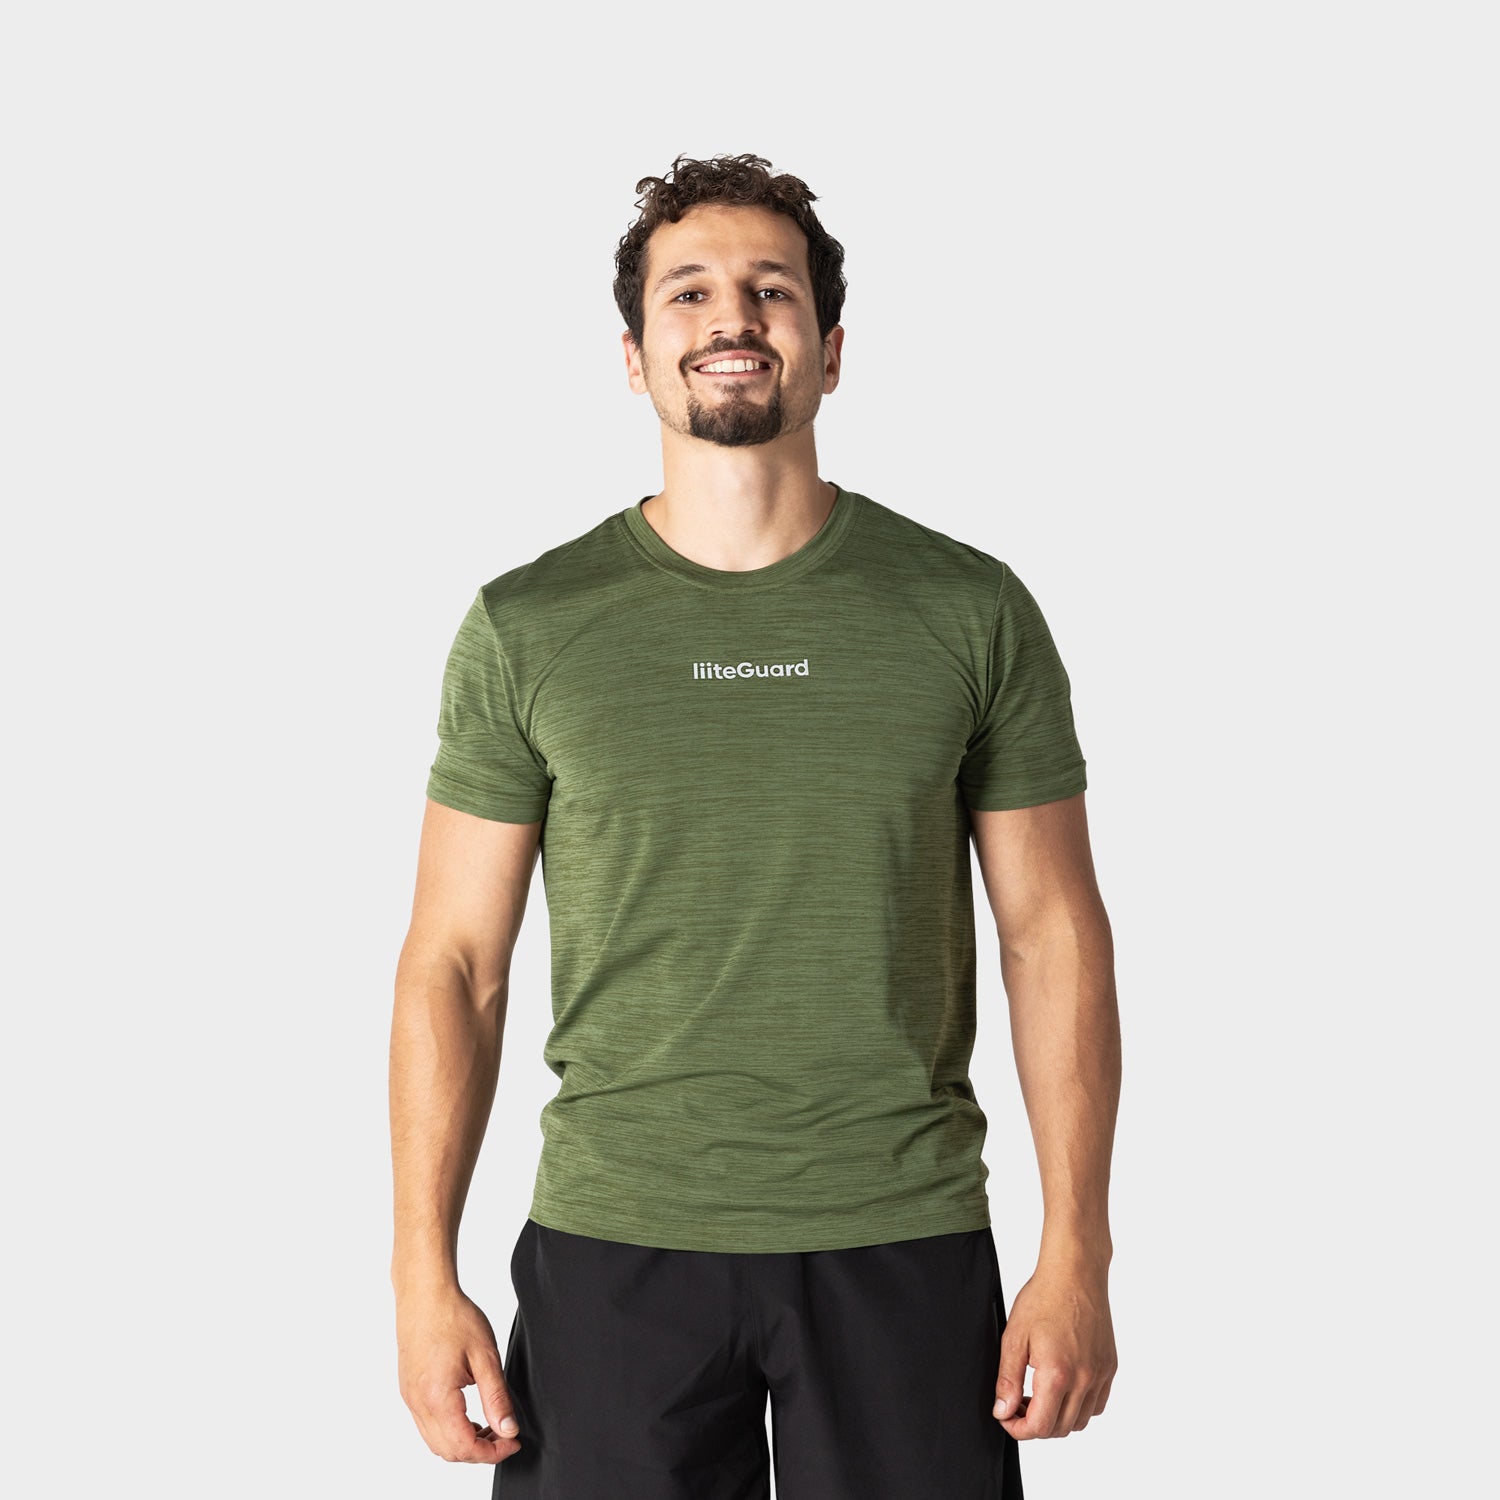 Liiteguard RE-LIITE T-SHIRT (Herr) T-shirts Army green